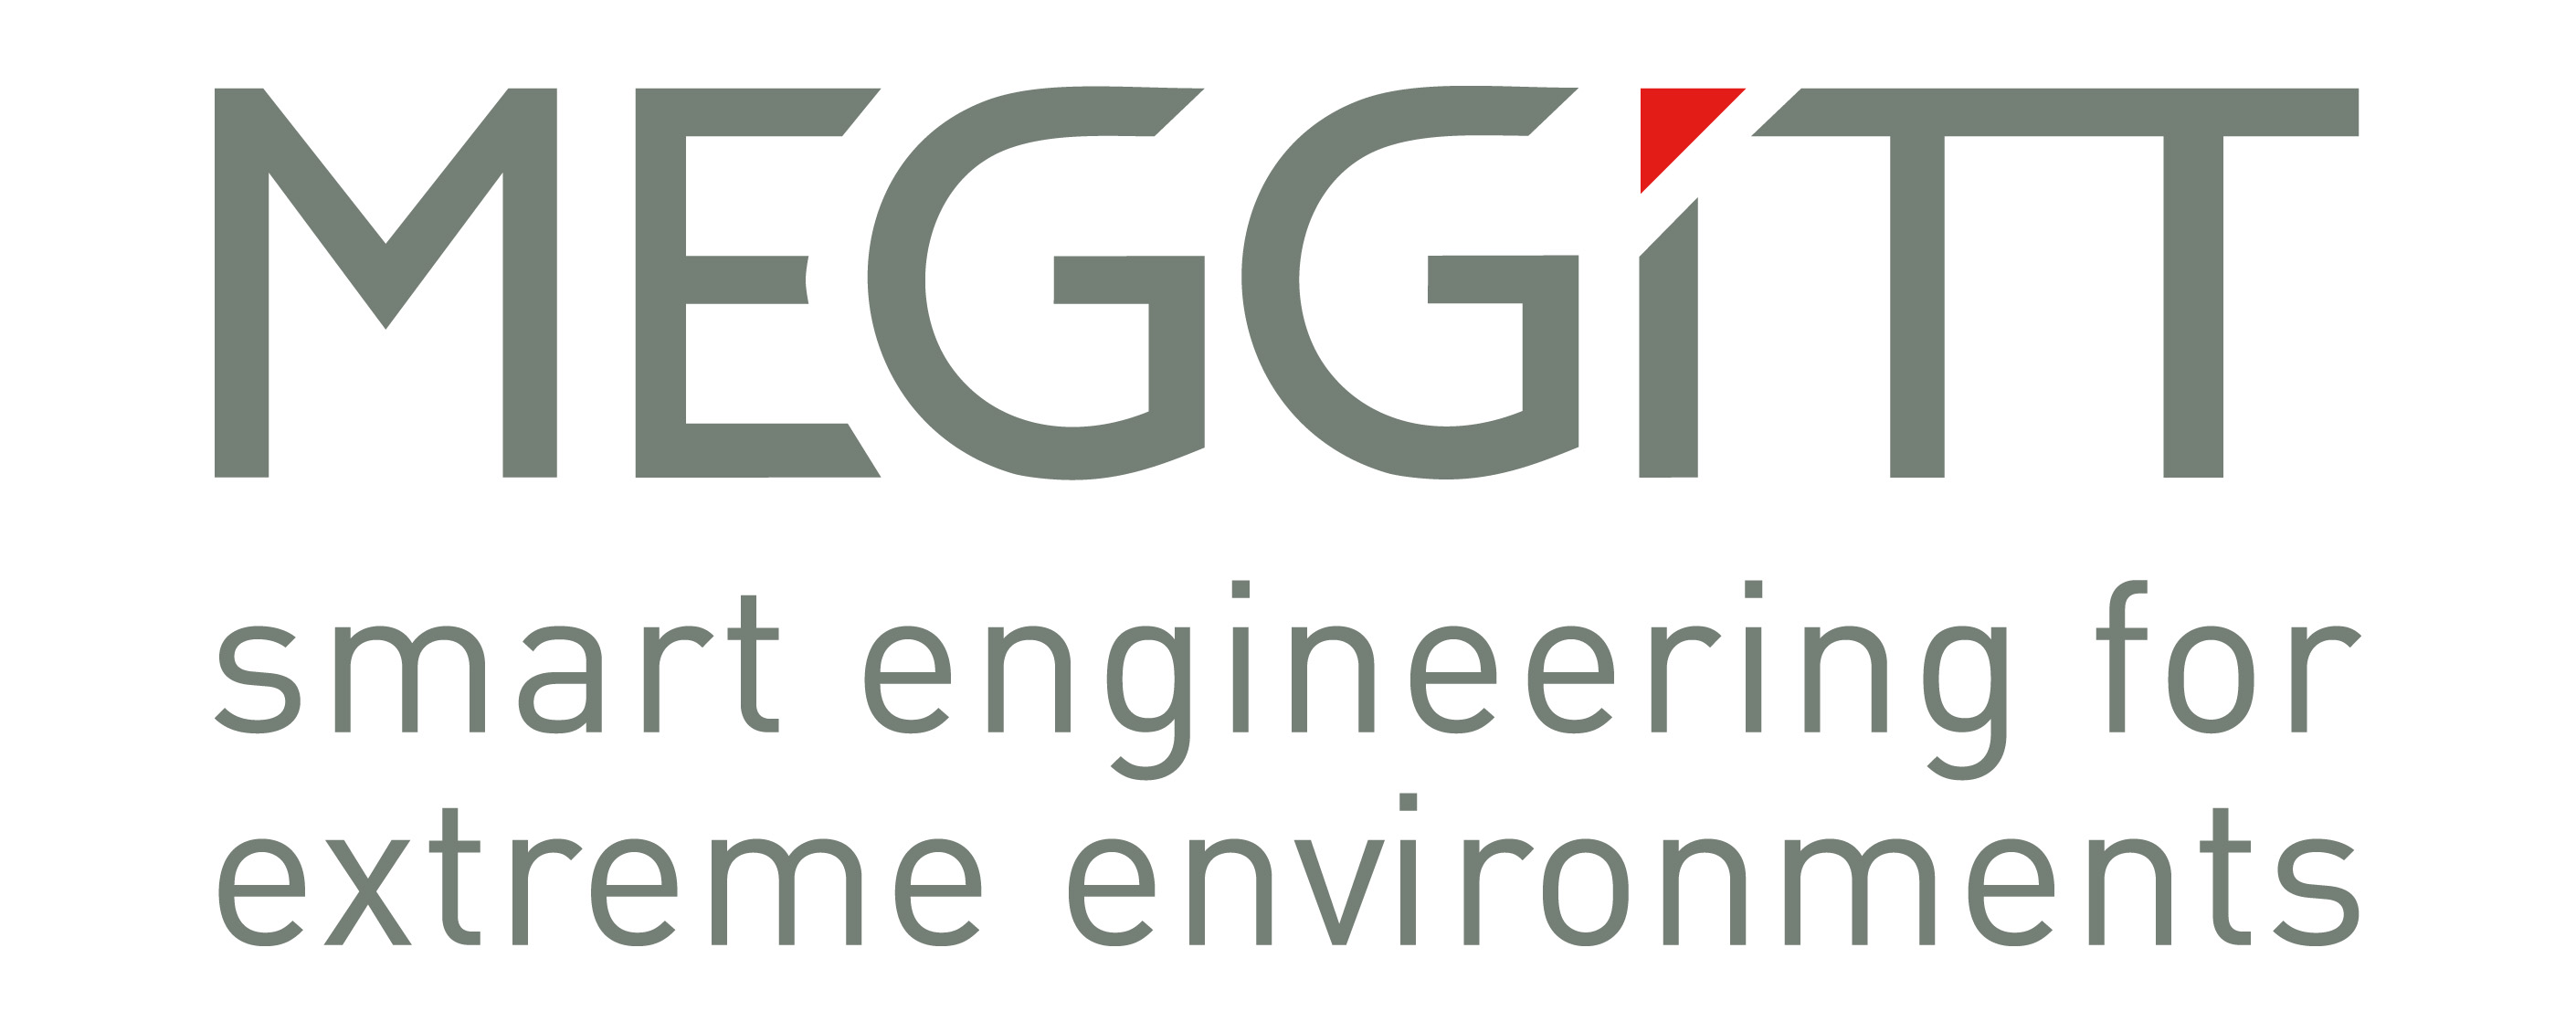 Meggitt Sensing Systems